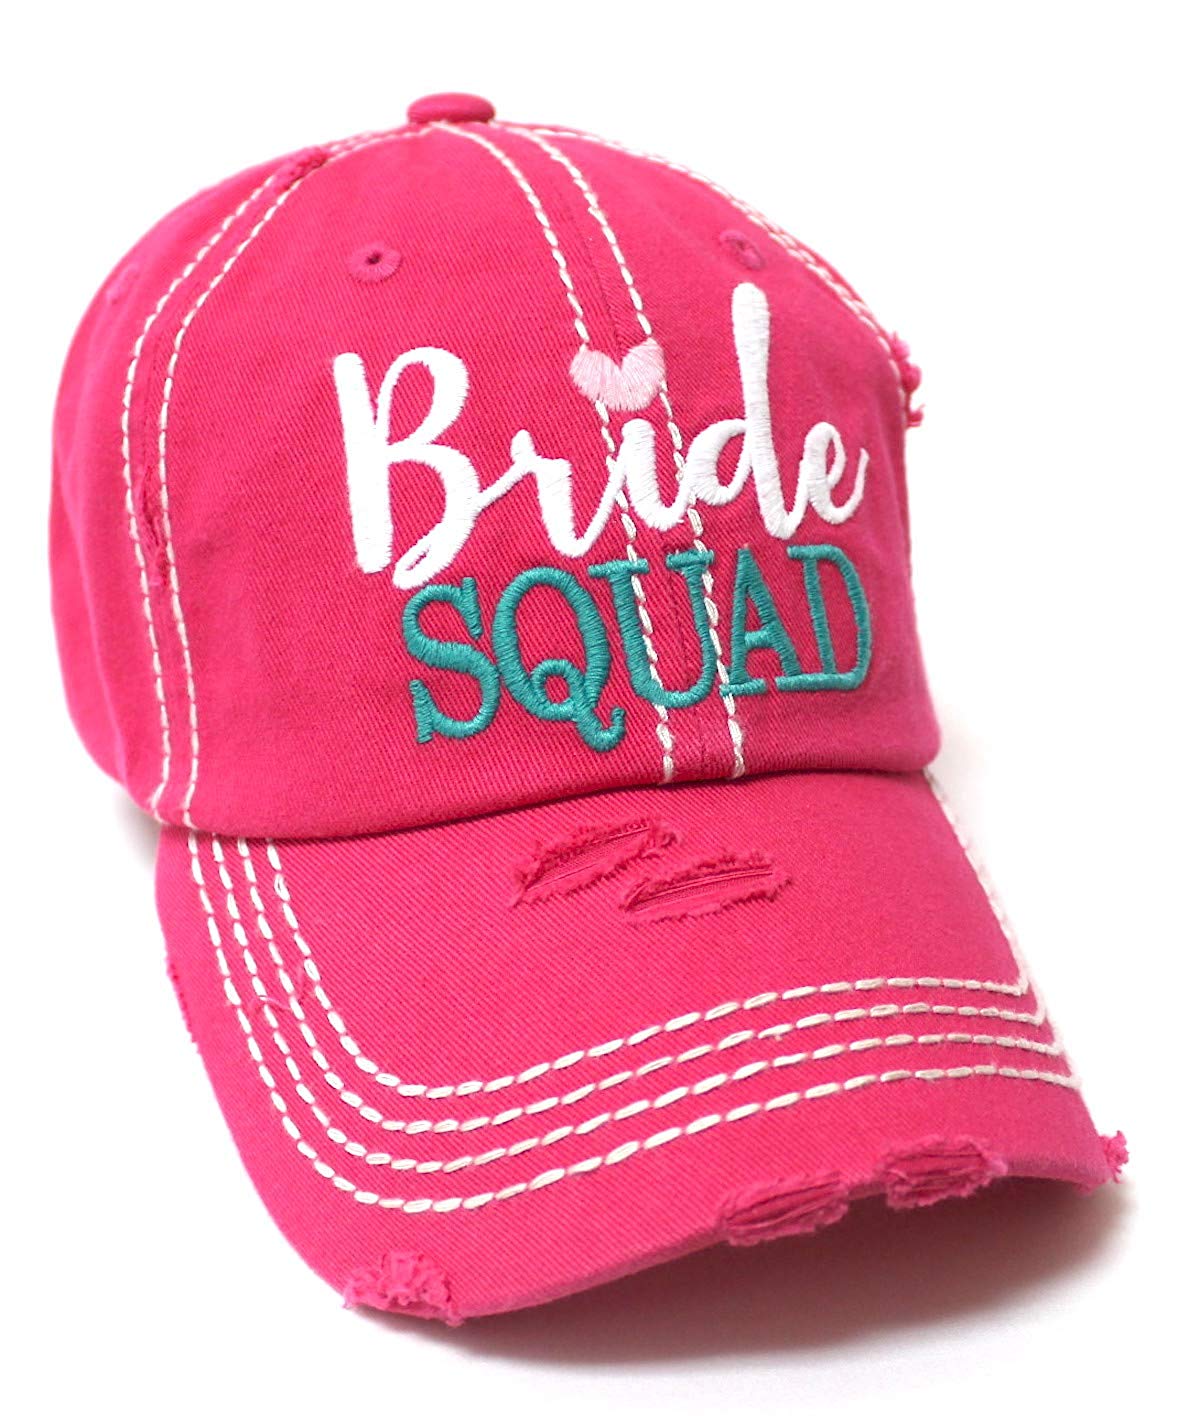 CAPS 'N VINTAGE Bridal Accessory Gift, Bride Squad Monogram One-Size Ballcap, Pink - Caps 'N Vintage 